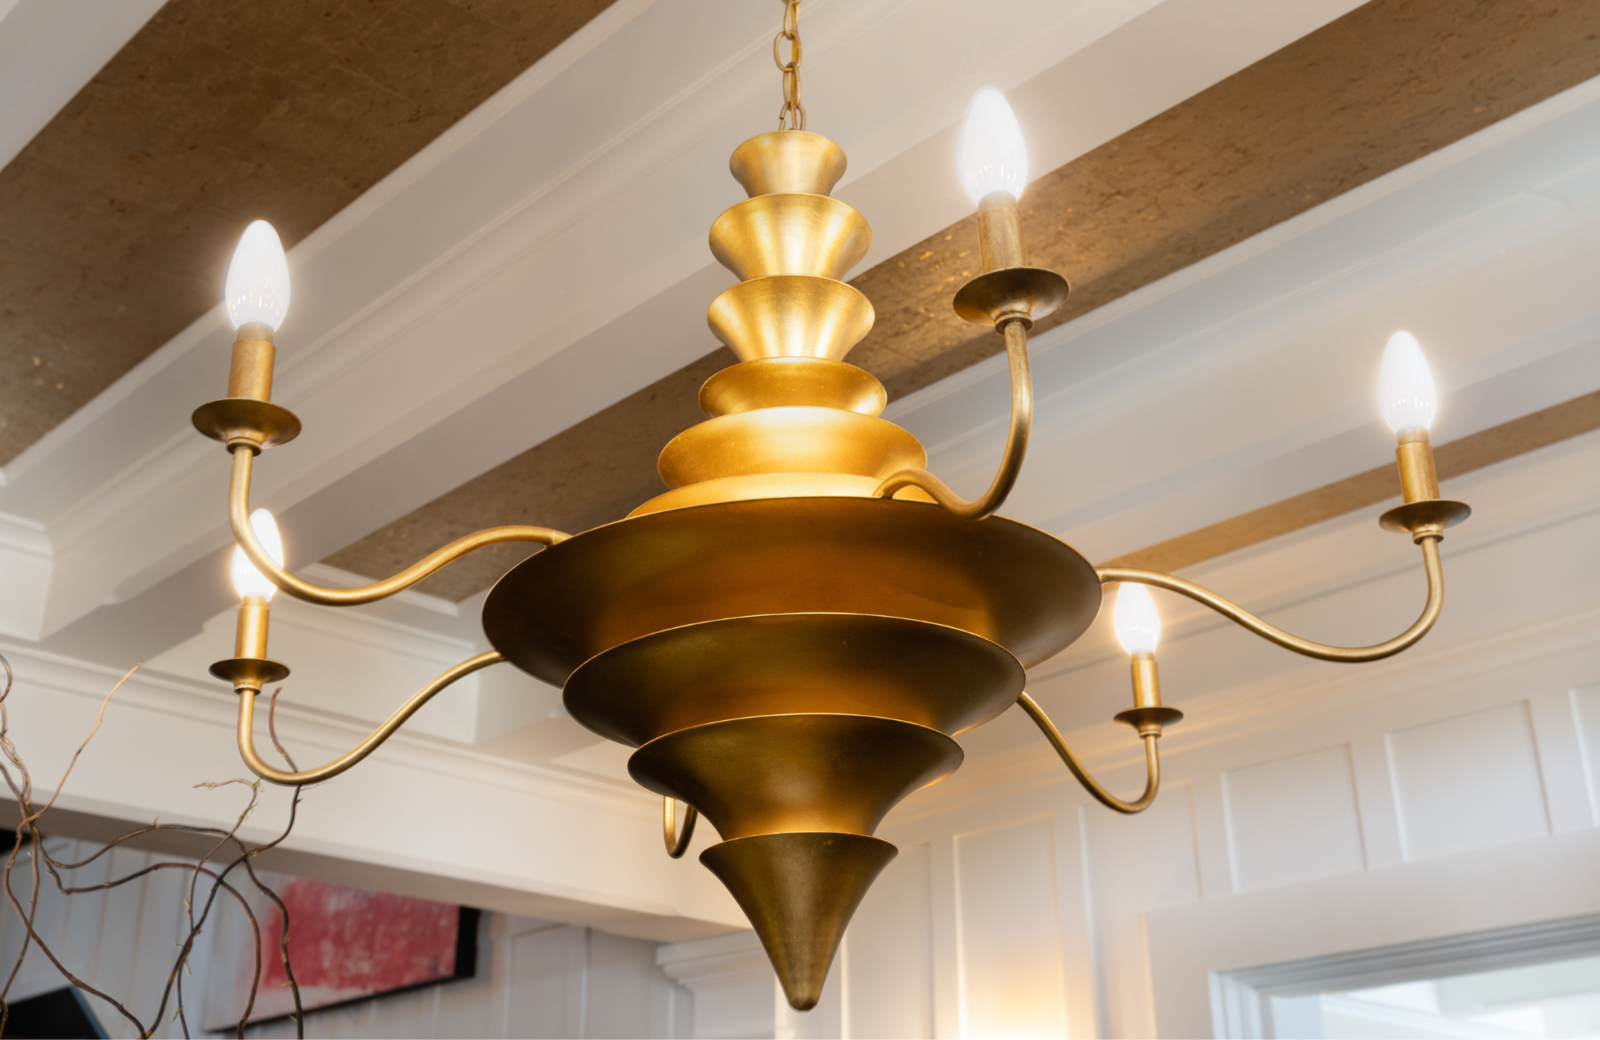 pamela-sandall-designs-la-ca-statement-wallpaper-light-from-chandelier-reflecting-on-gold-cork-wallpaper